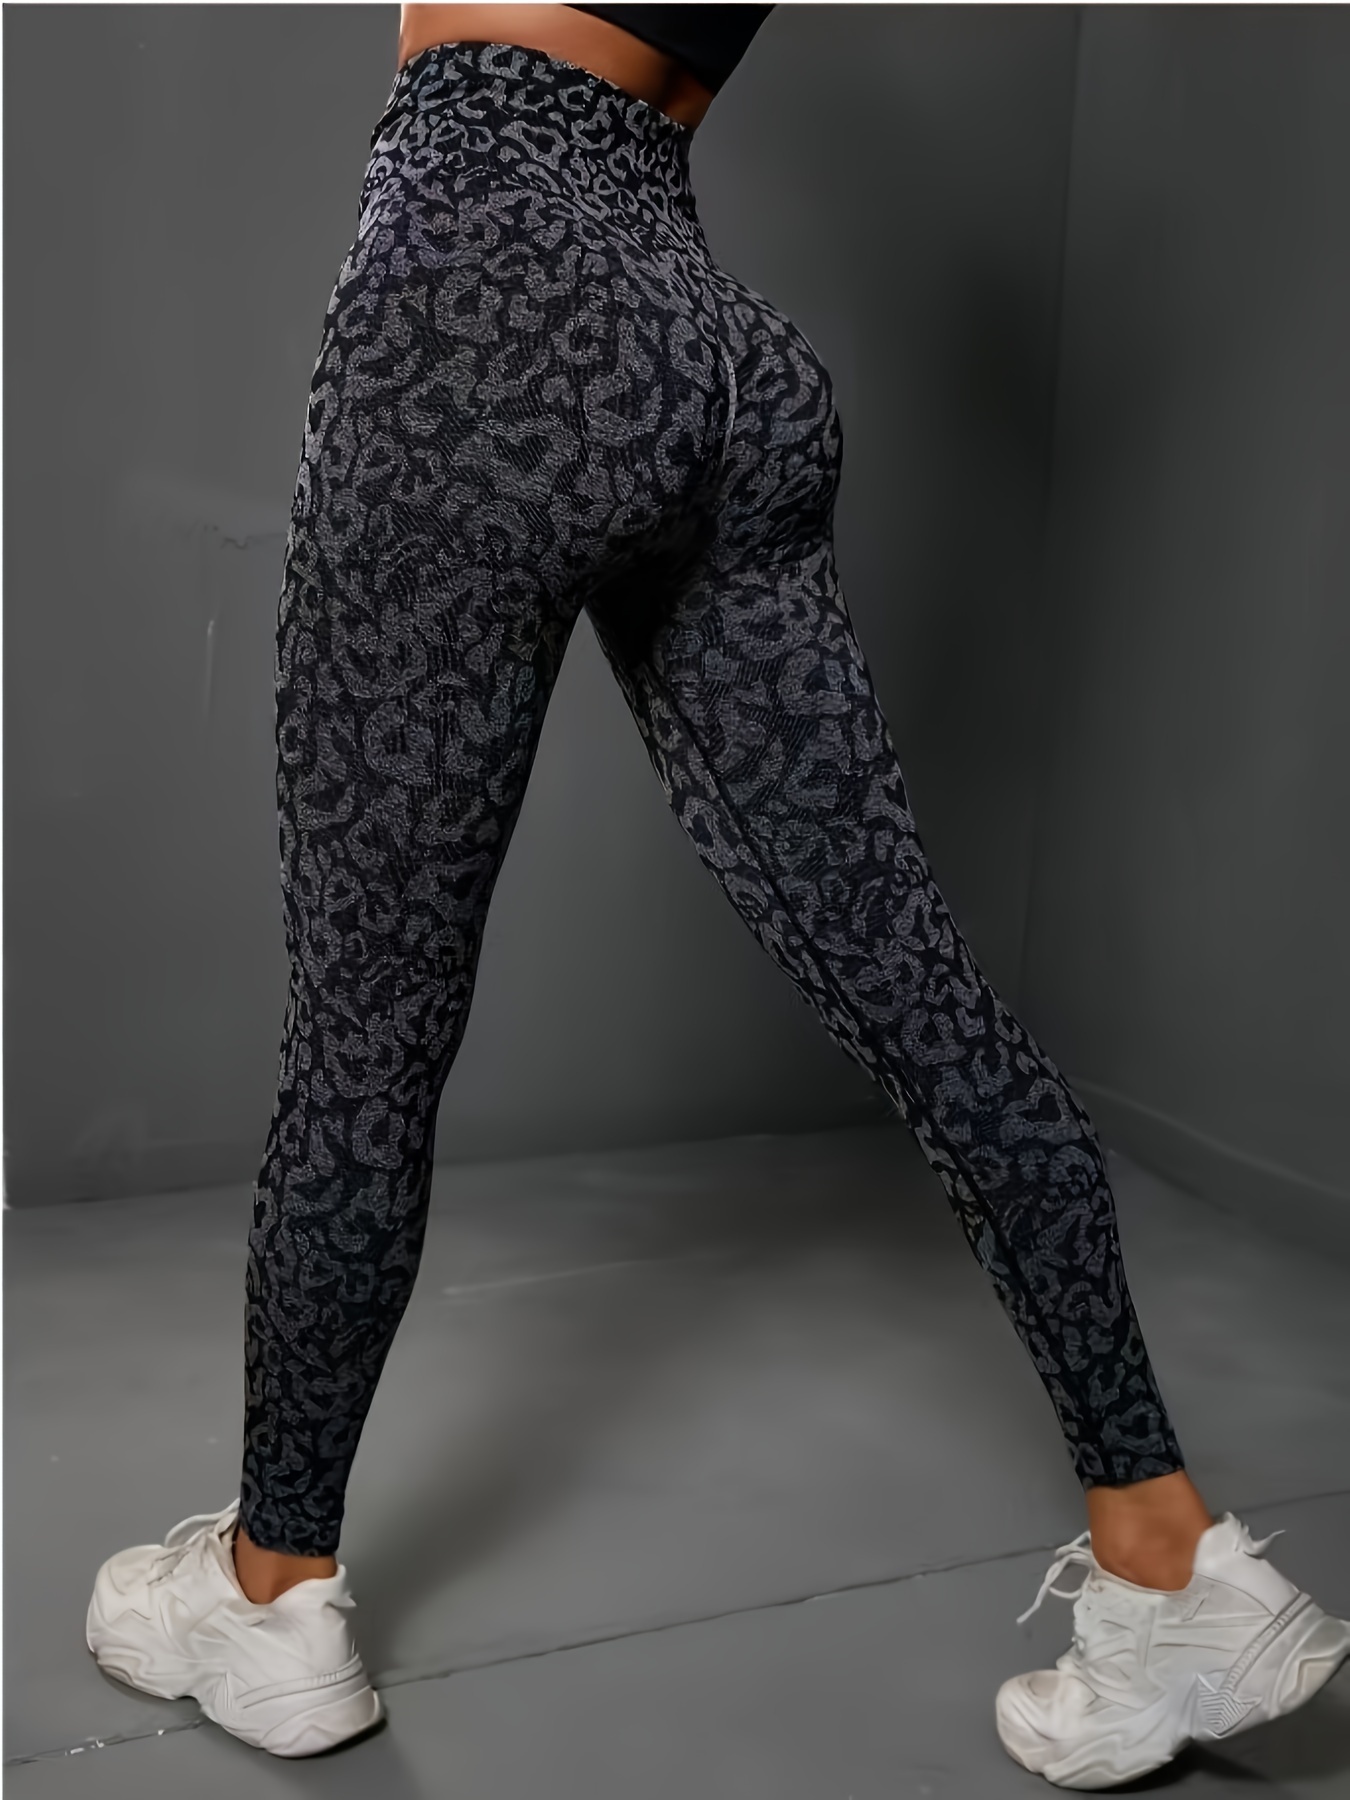 Leopard Print Fitness Gym Sports Leggings, High Waist Yoga Workout Running  Tight Pants, Women's Activewear